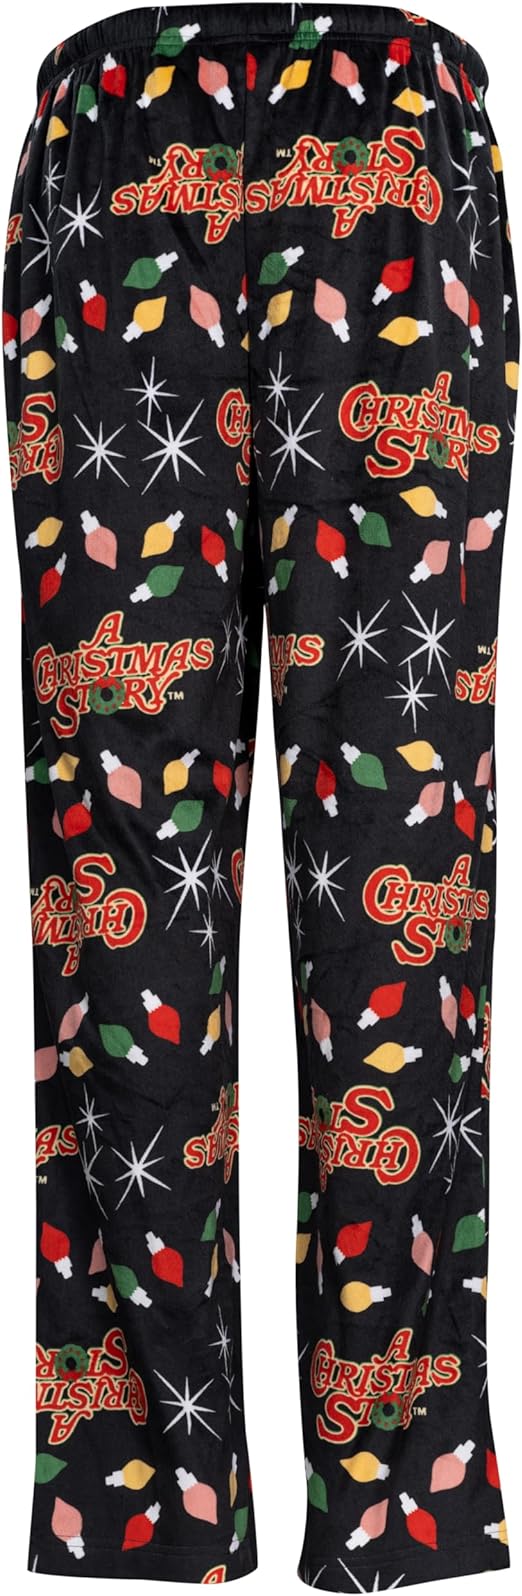 Brushed Fleece Holiday Lights Pj Lounge Pants Pajamas for Men